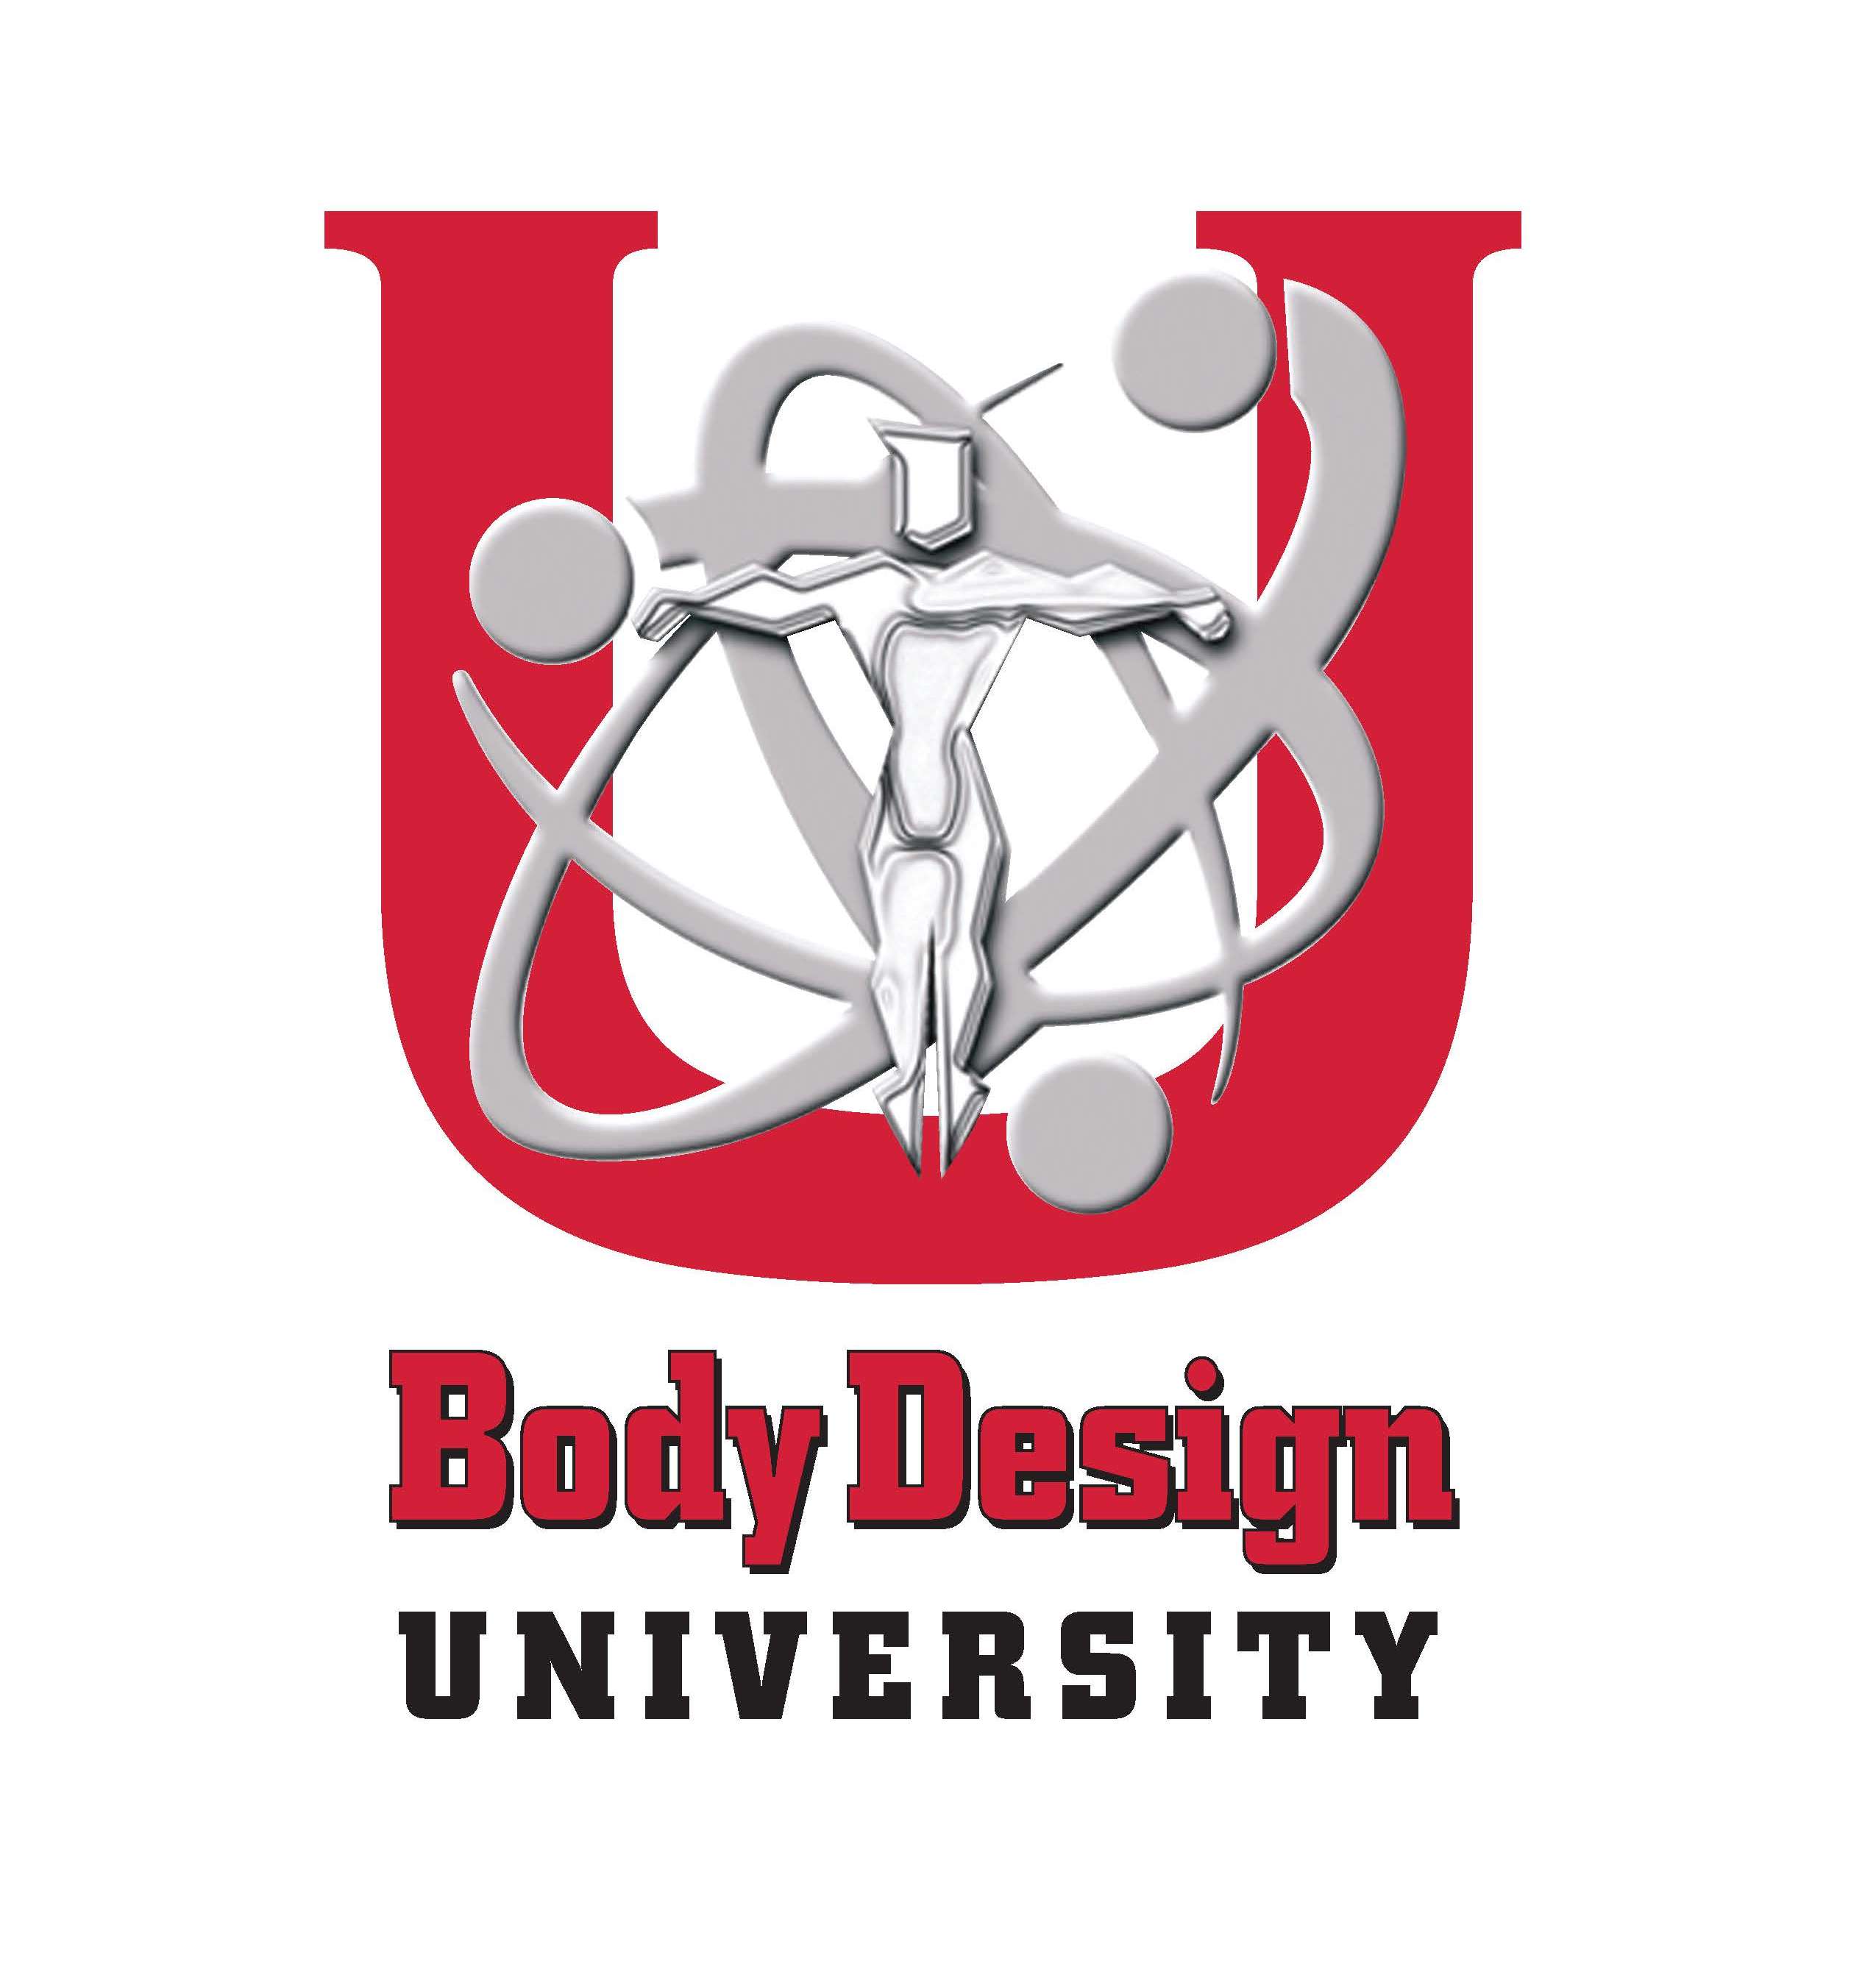 Body Design University logo